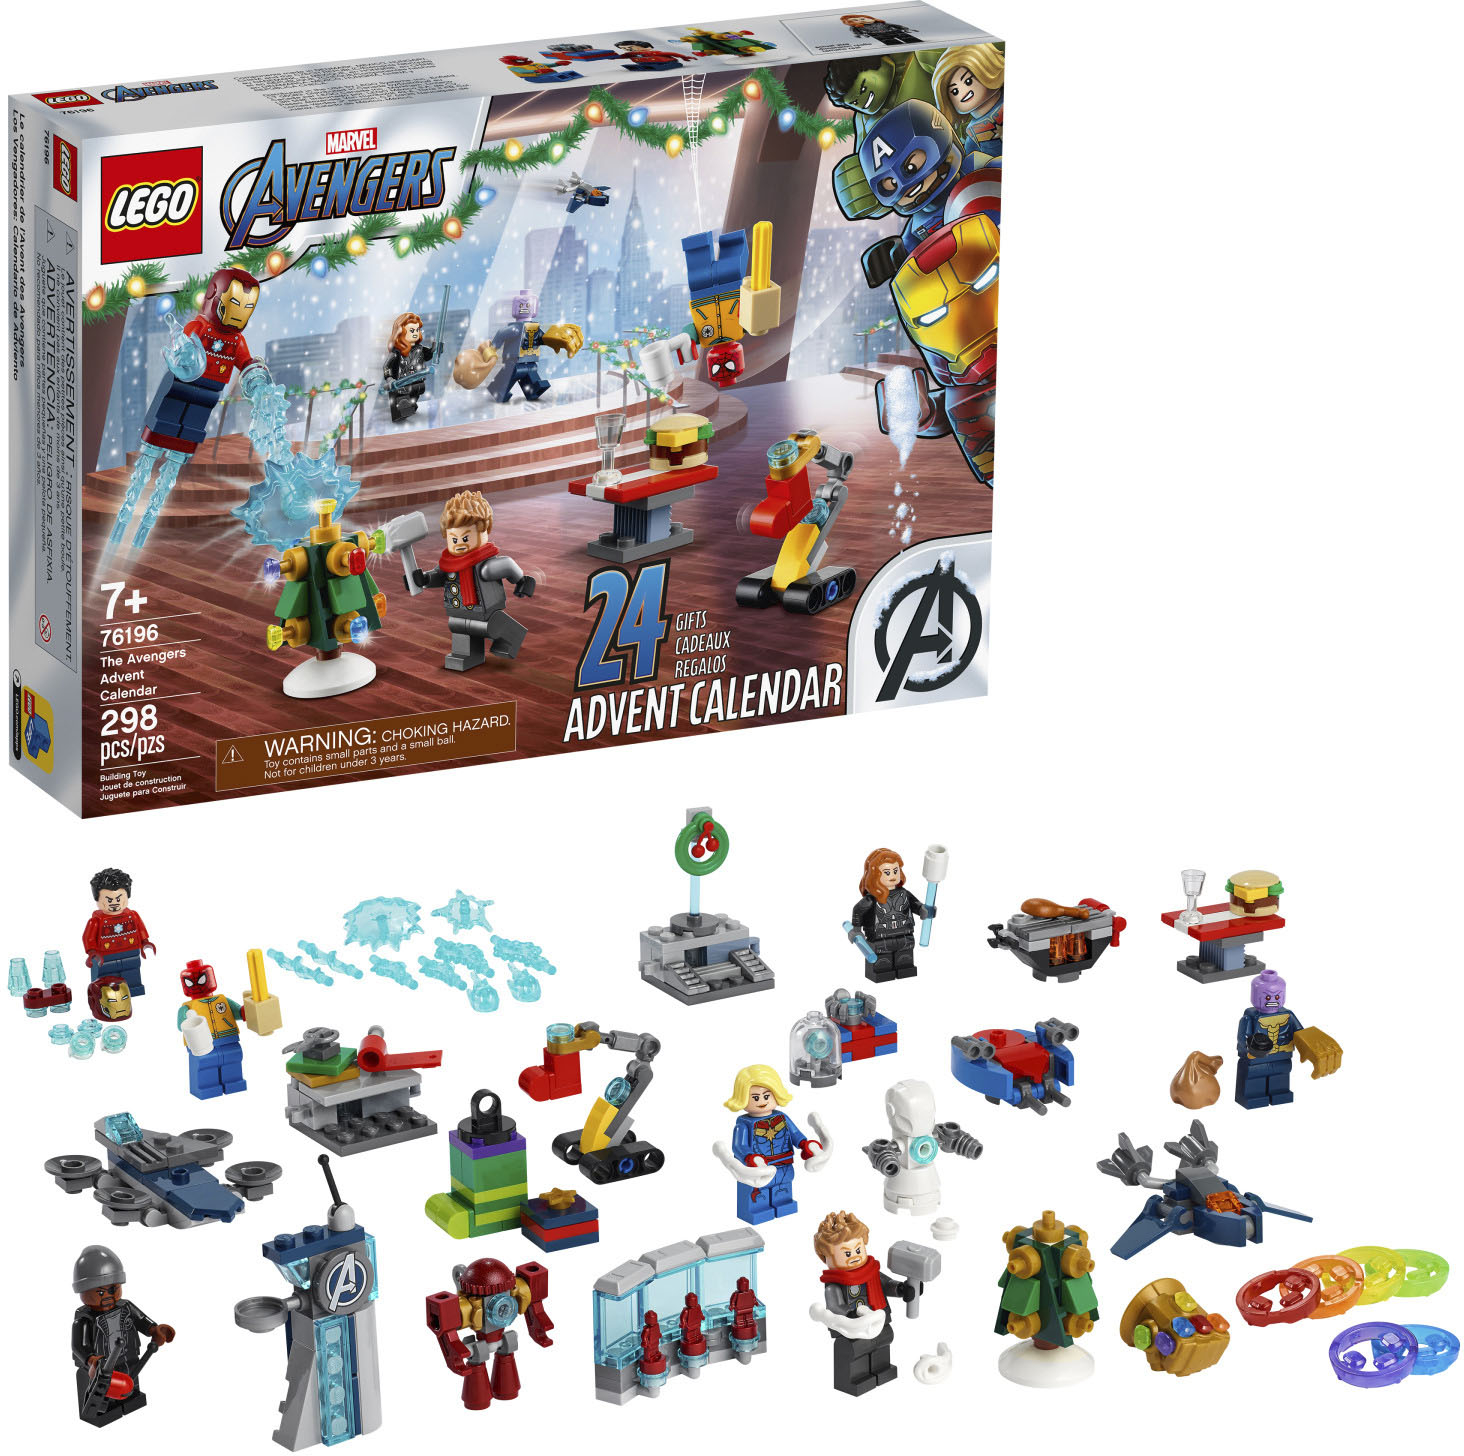 triathlon Bot plads LEGO Super Heroes The Avengers Advent Calendar 76196 6332592 - Best Buy